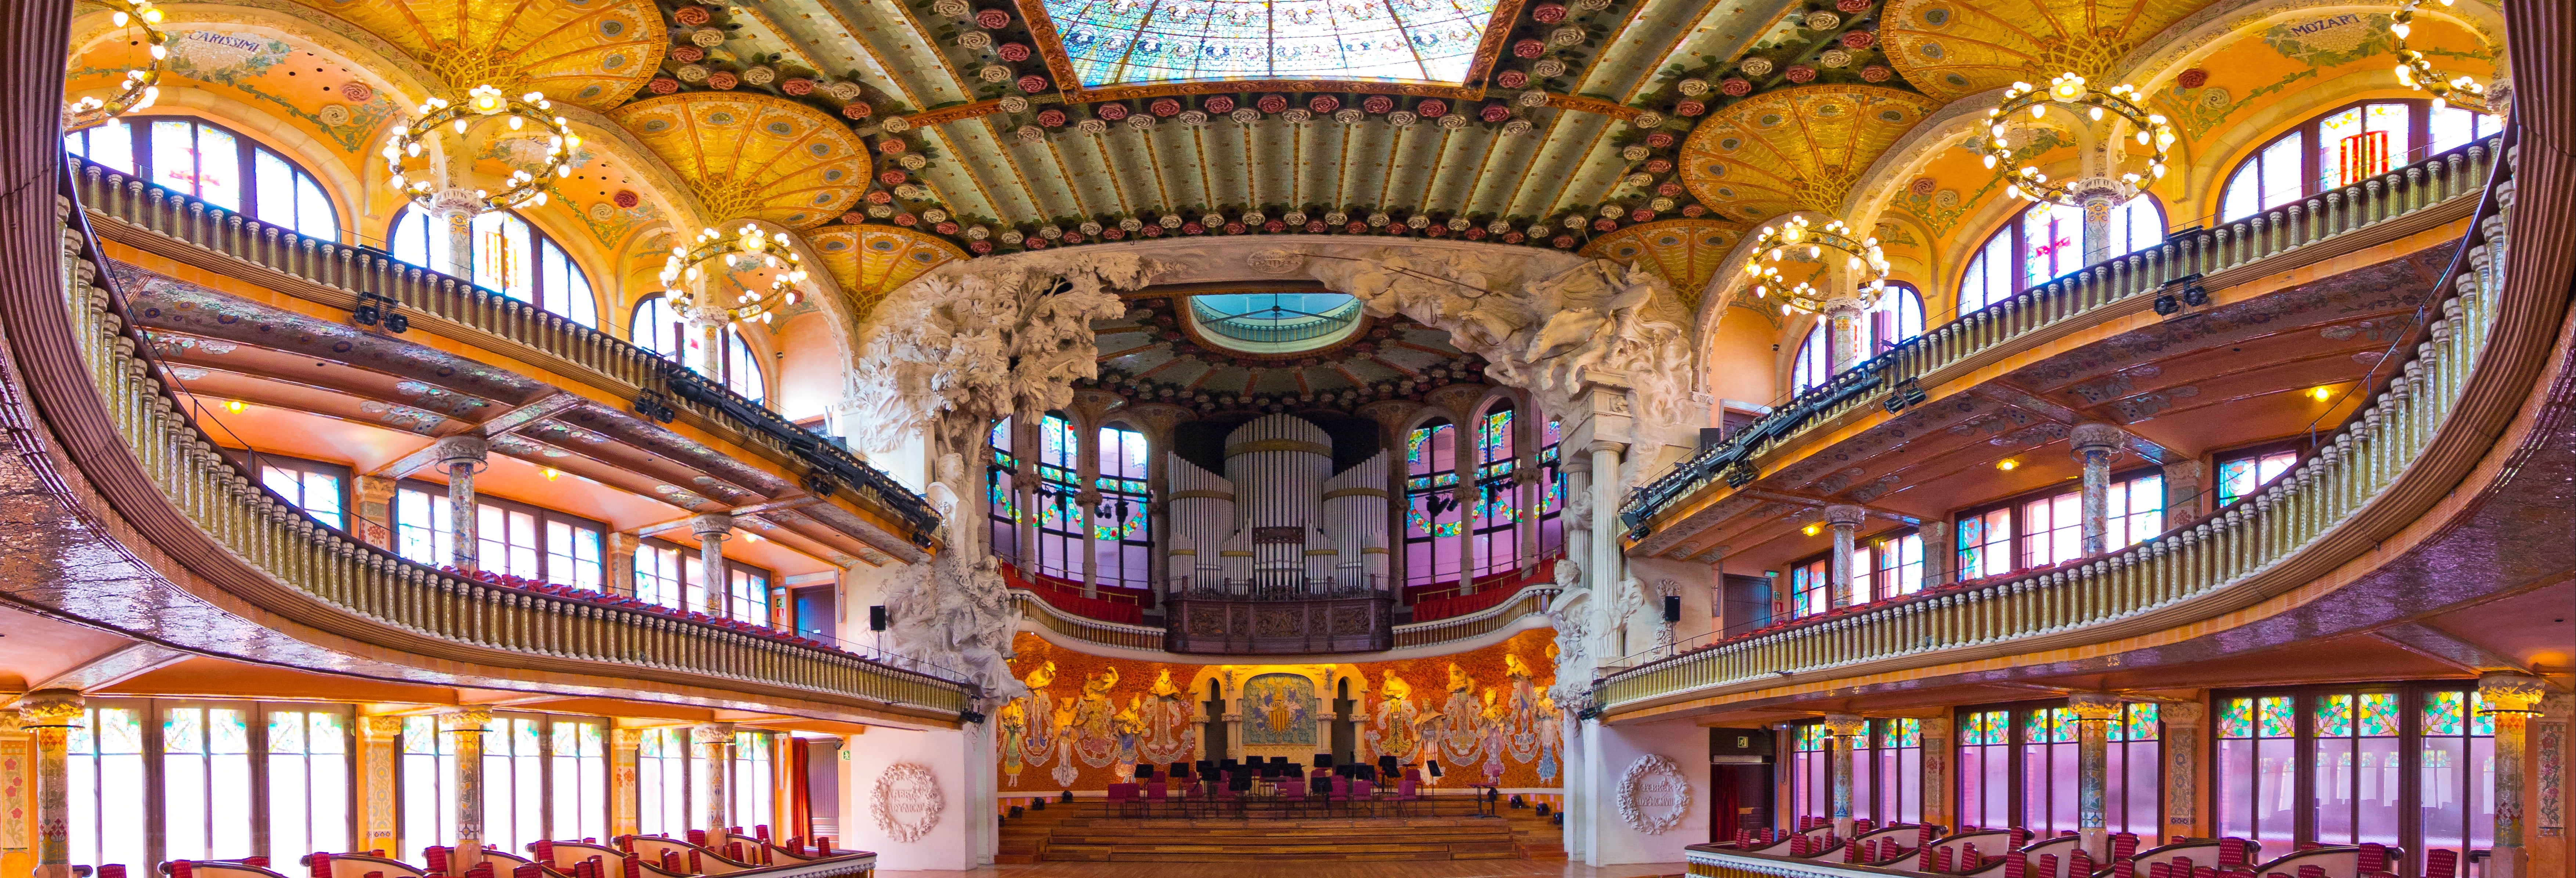 Visita pelo Palau de la Música Catalana